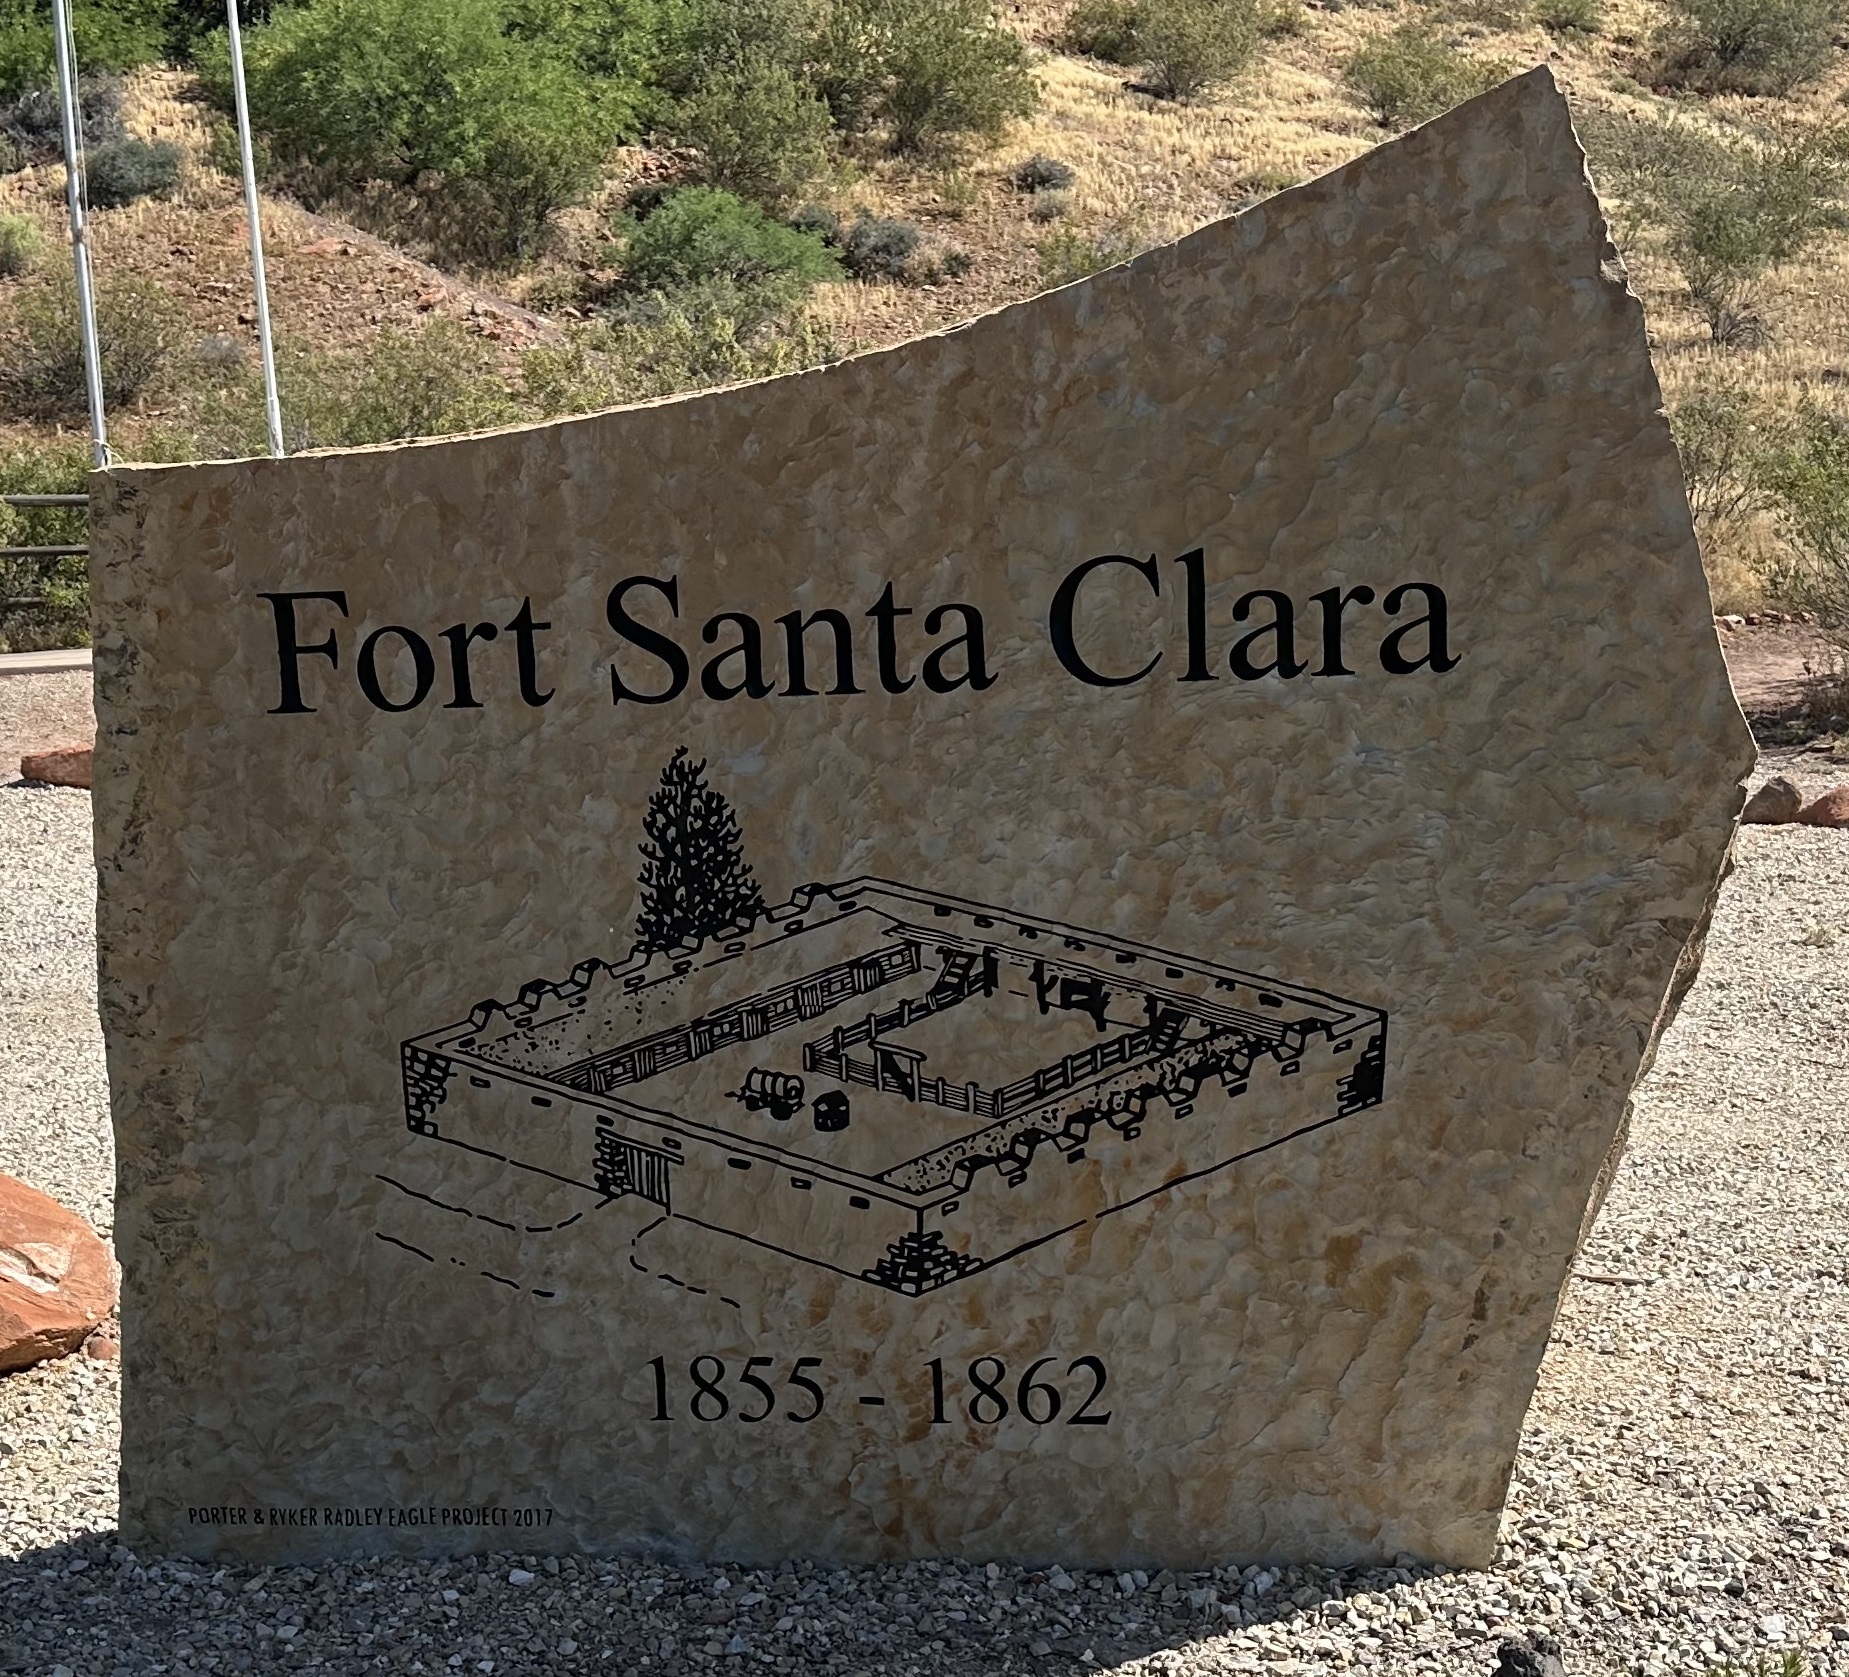 Sign at the Fort Santa Clara Historical Site